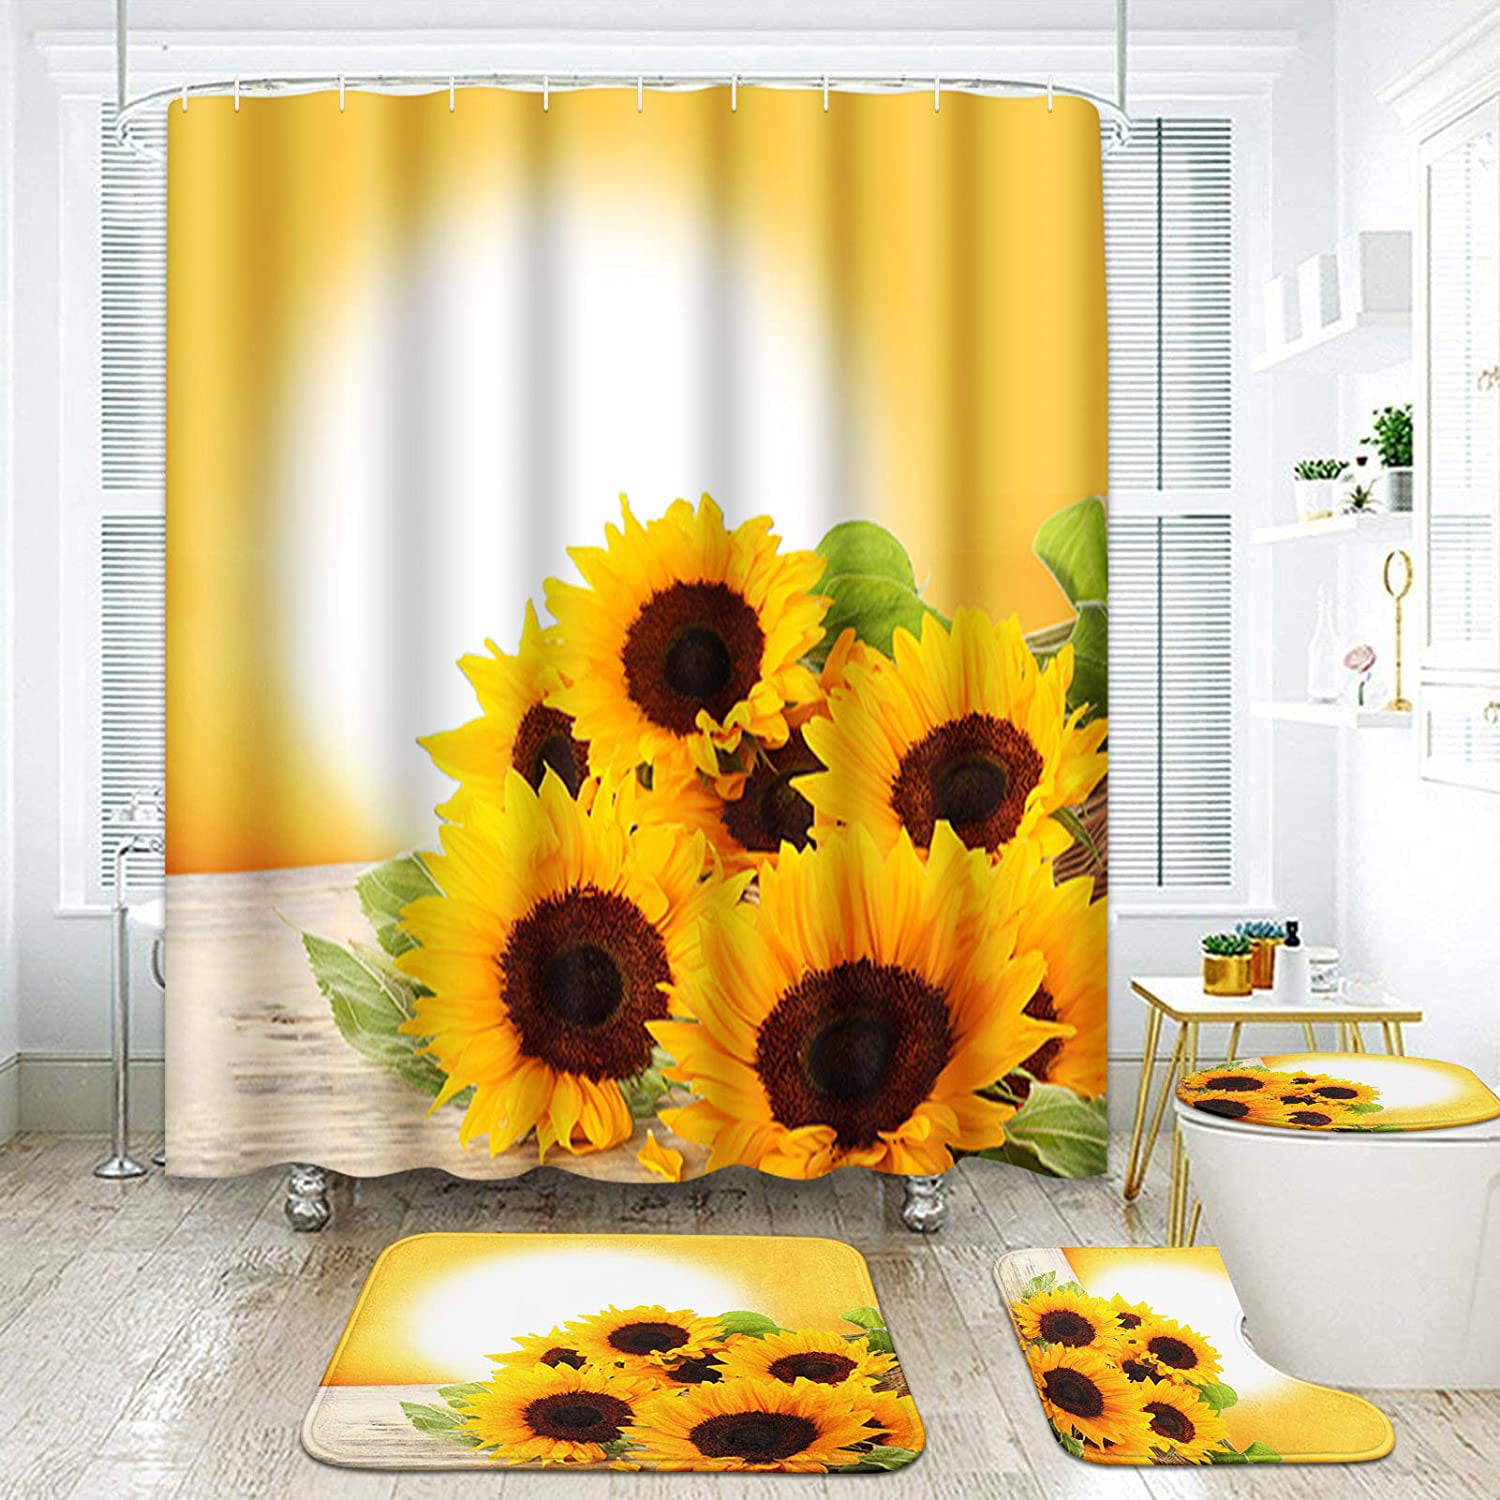 Details about   4Pcs Sunset Yellow Sunflower Shower Curtain Bathroom Toilet Seat Cover Bath 